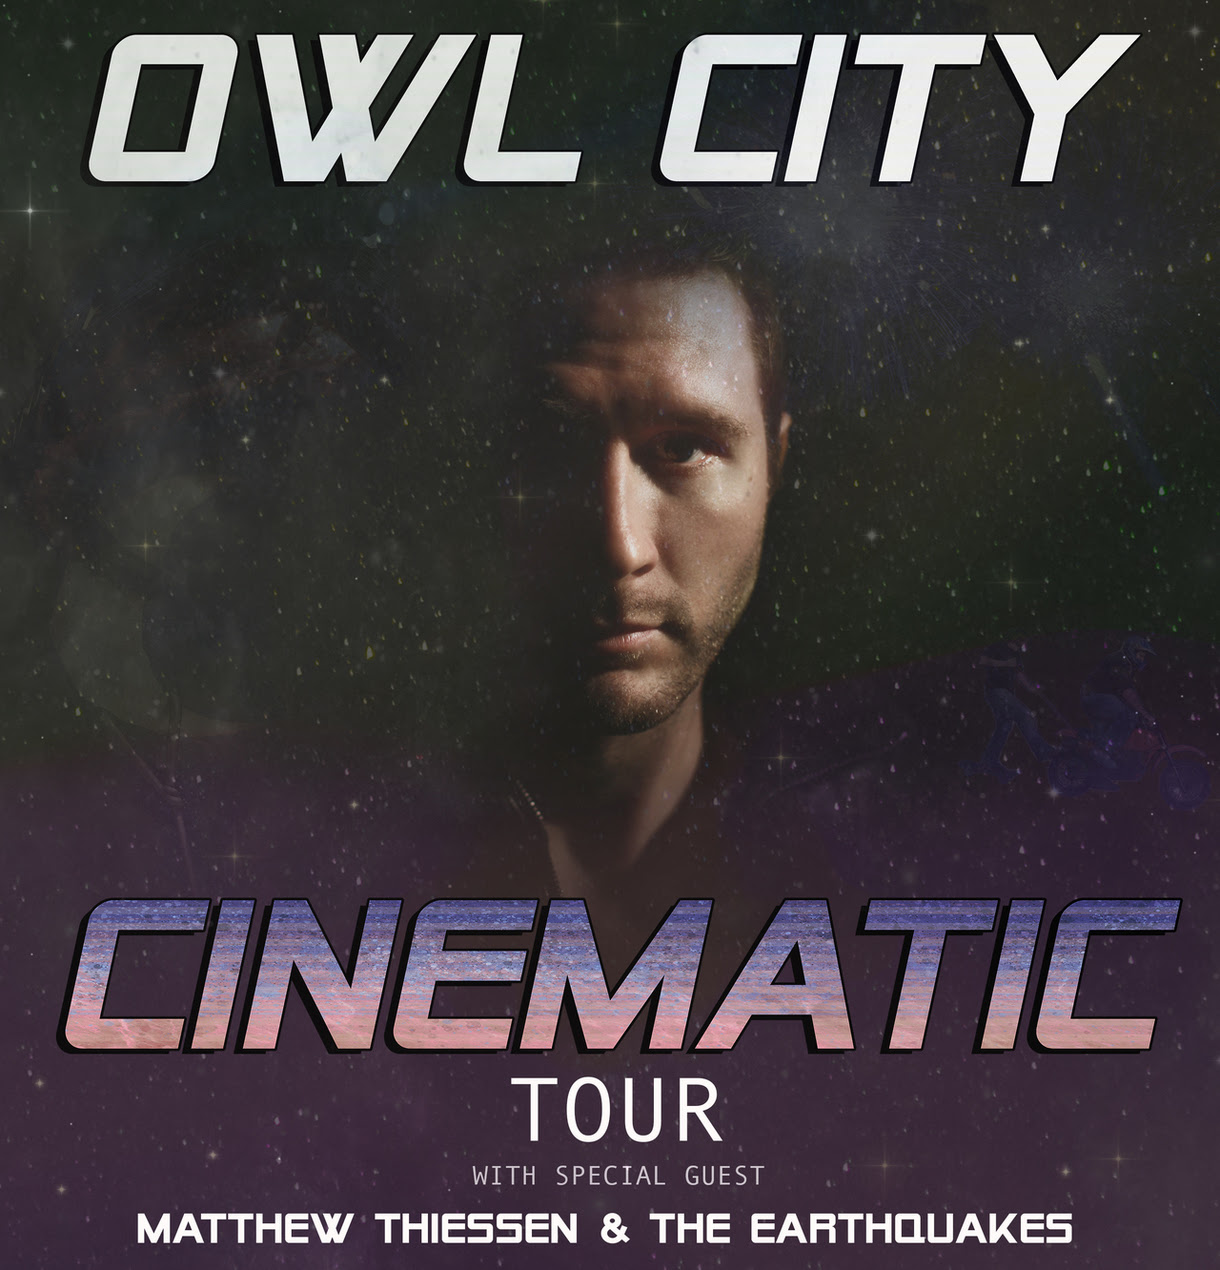 owl city tour history